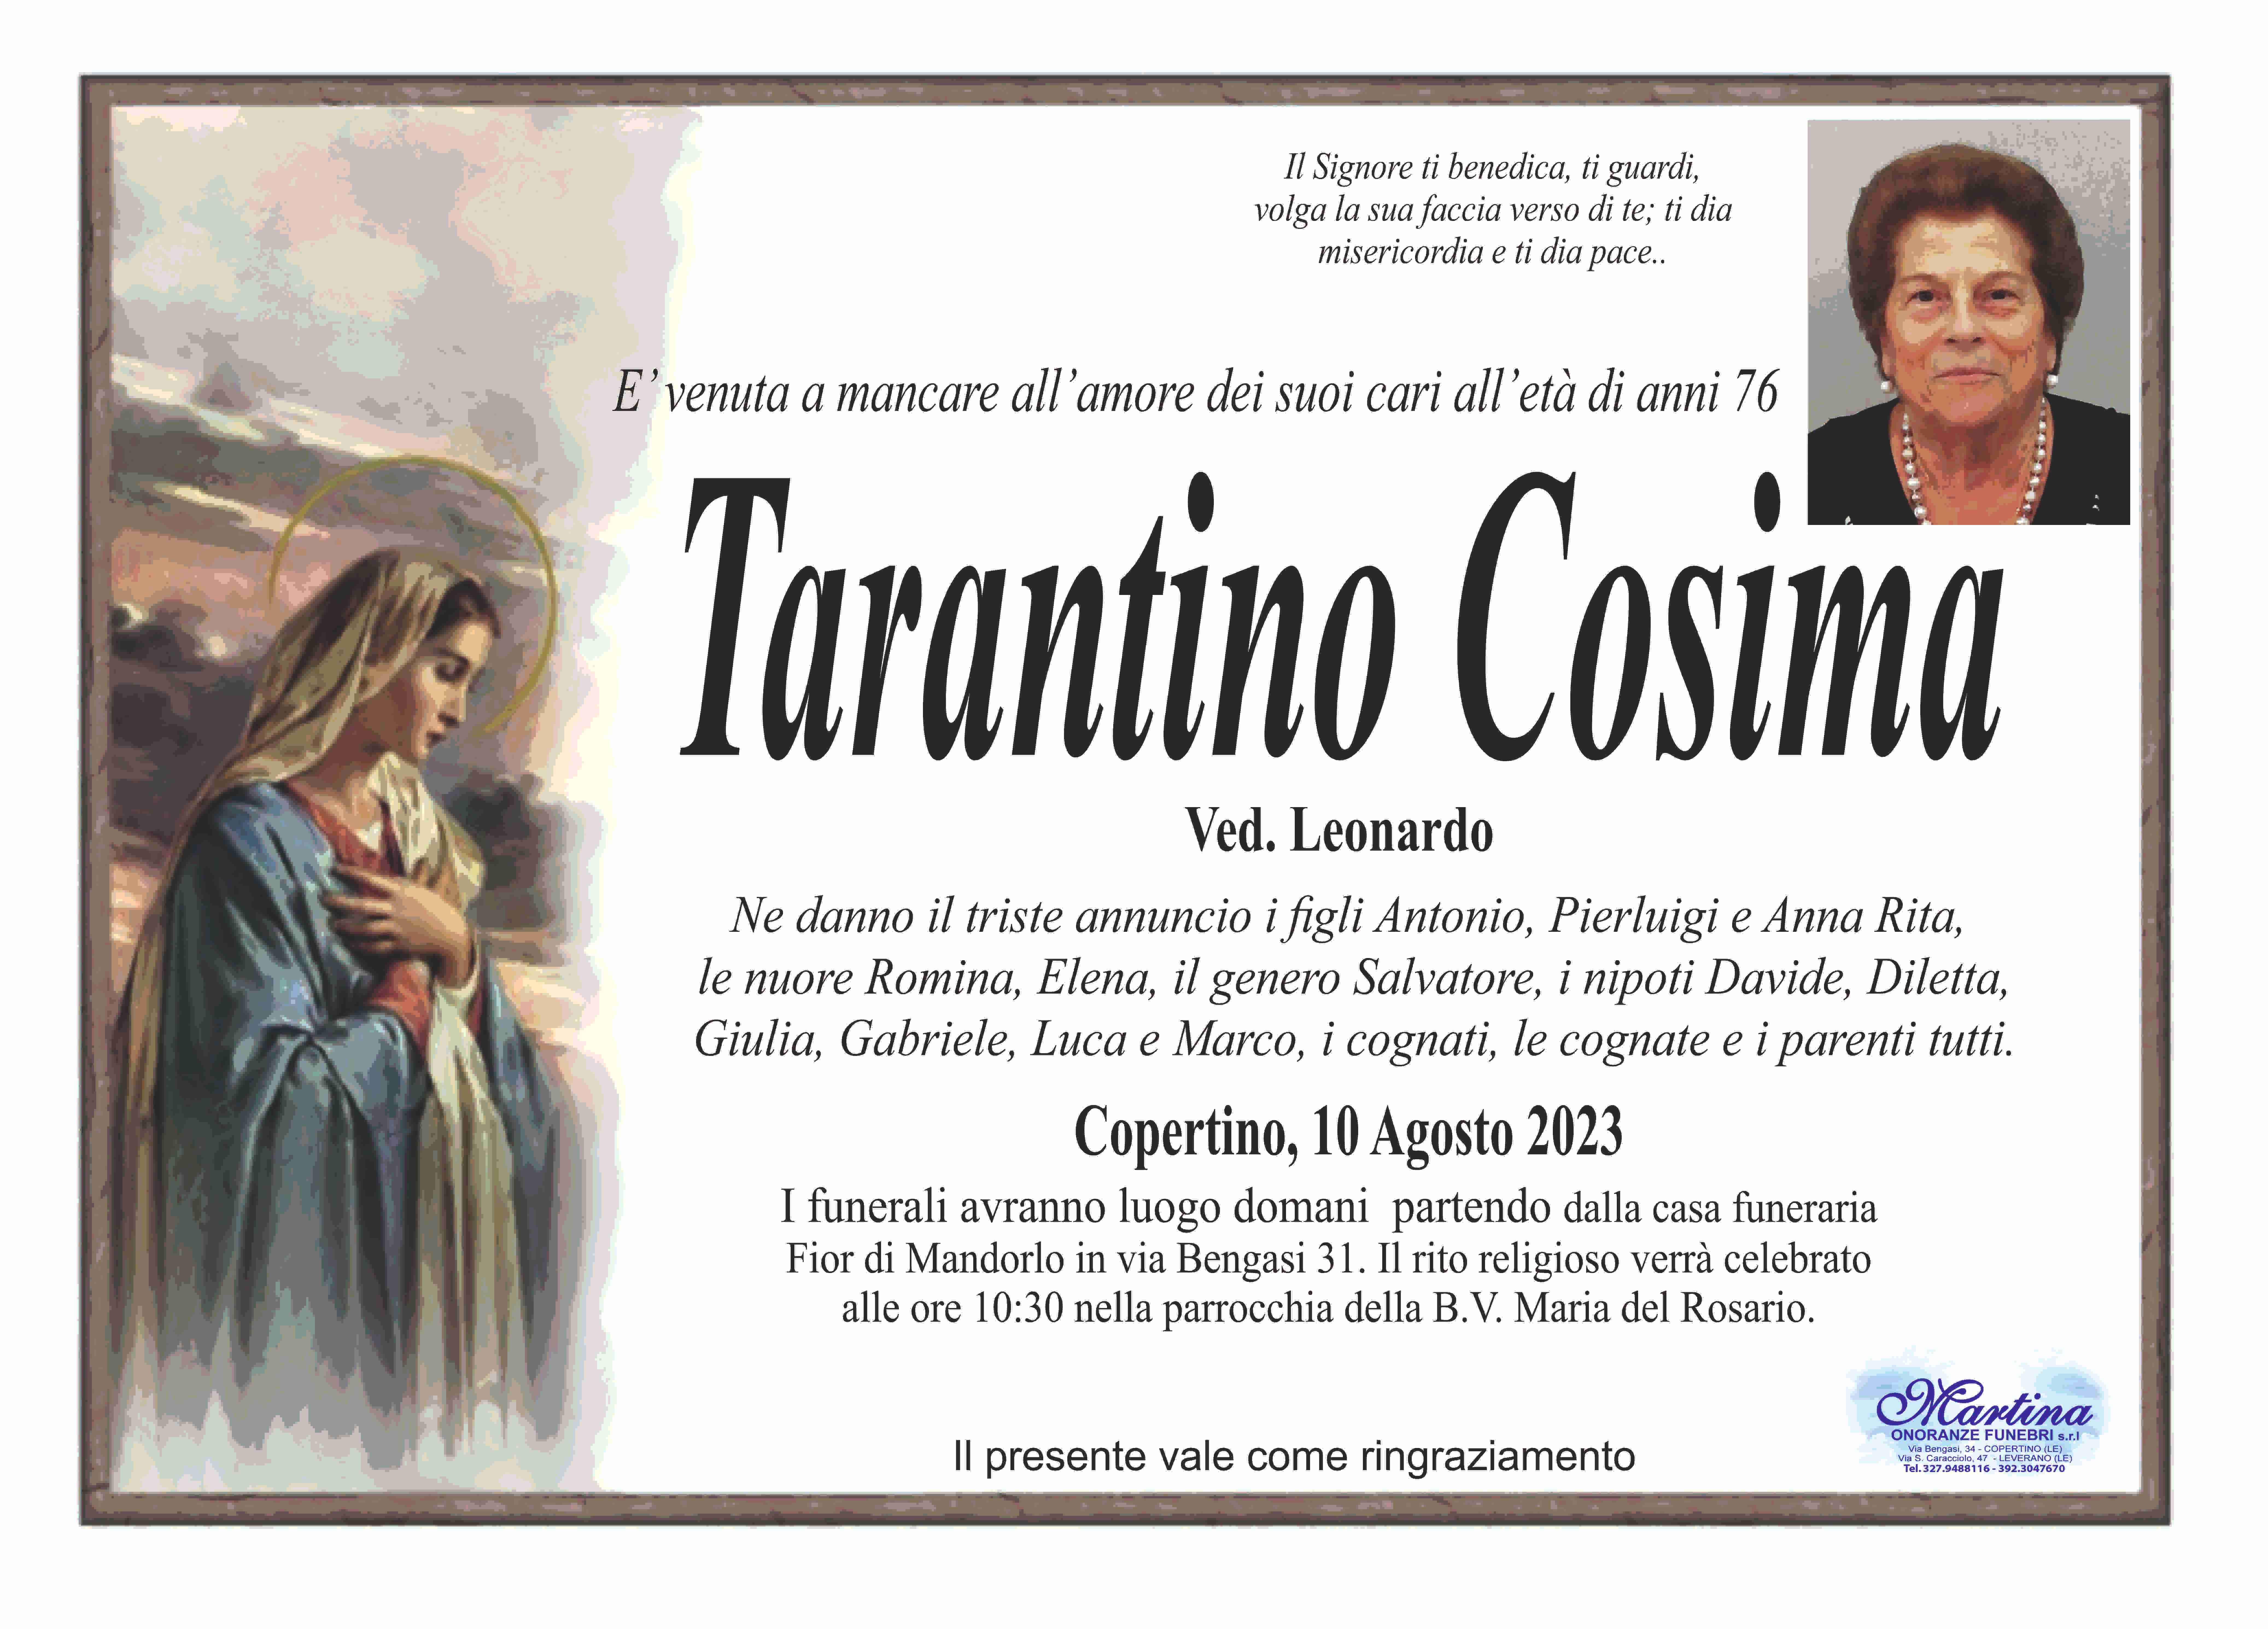 Cosima Tarantino